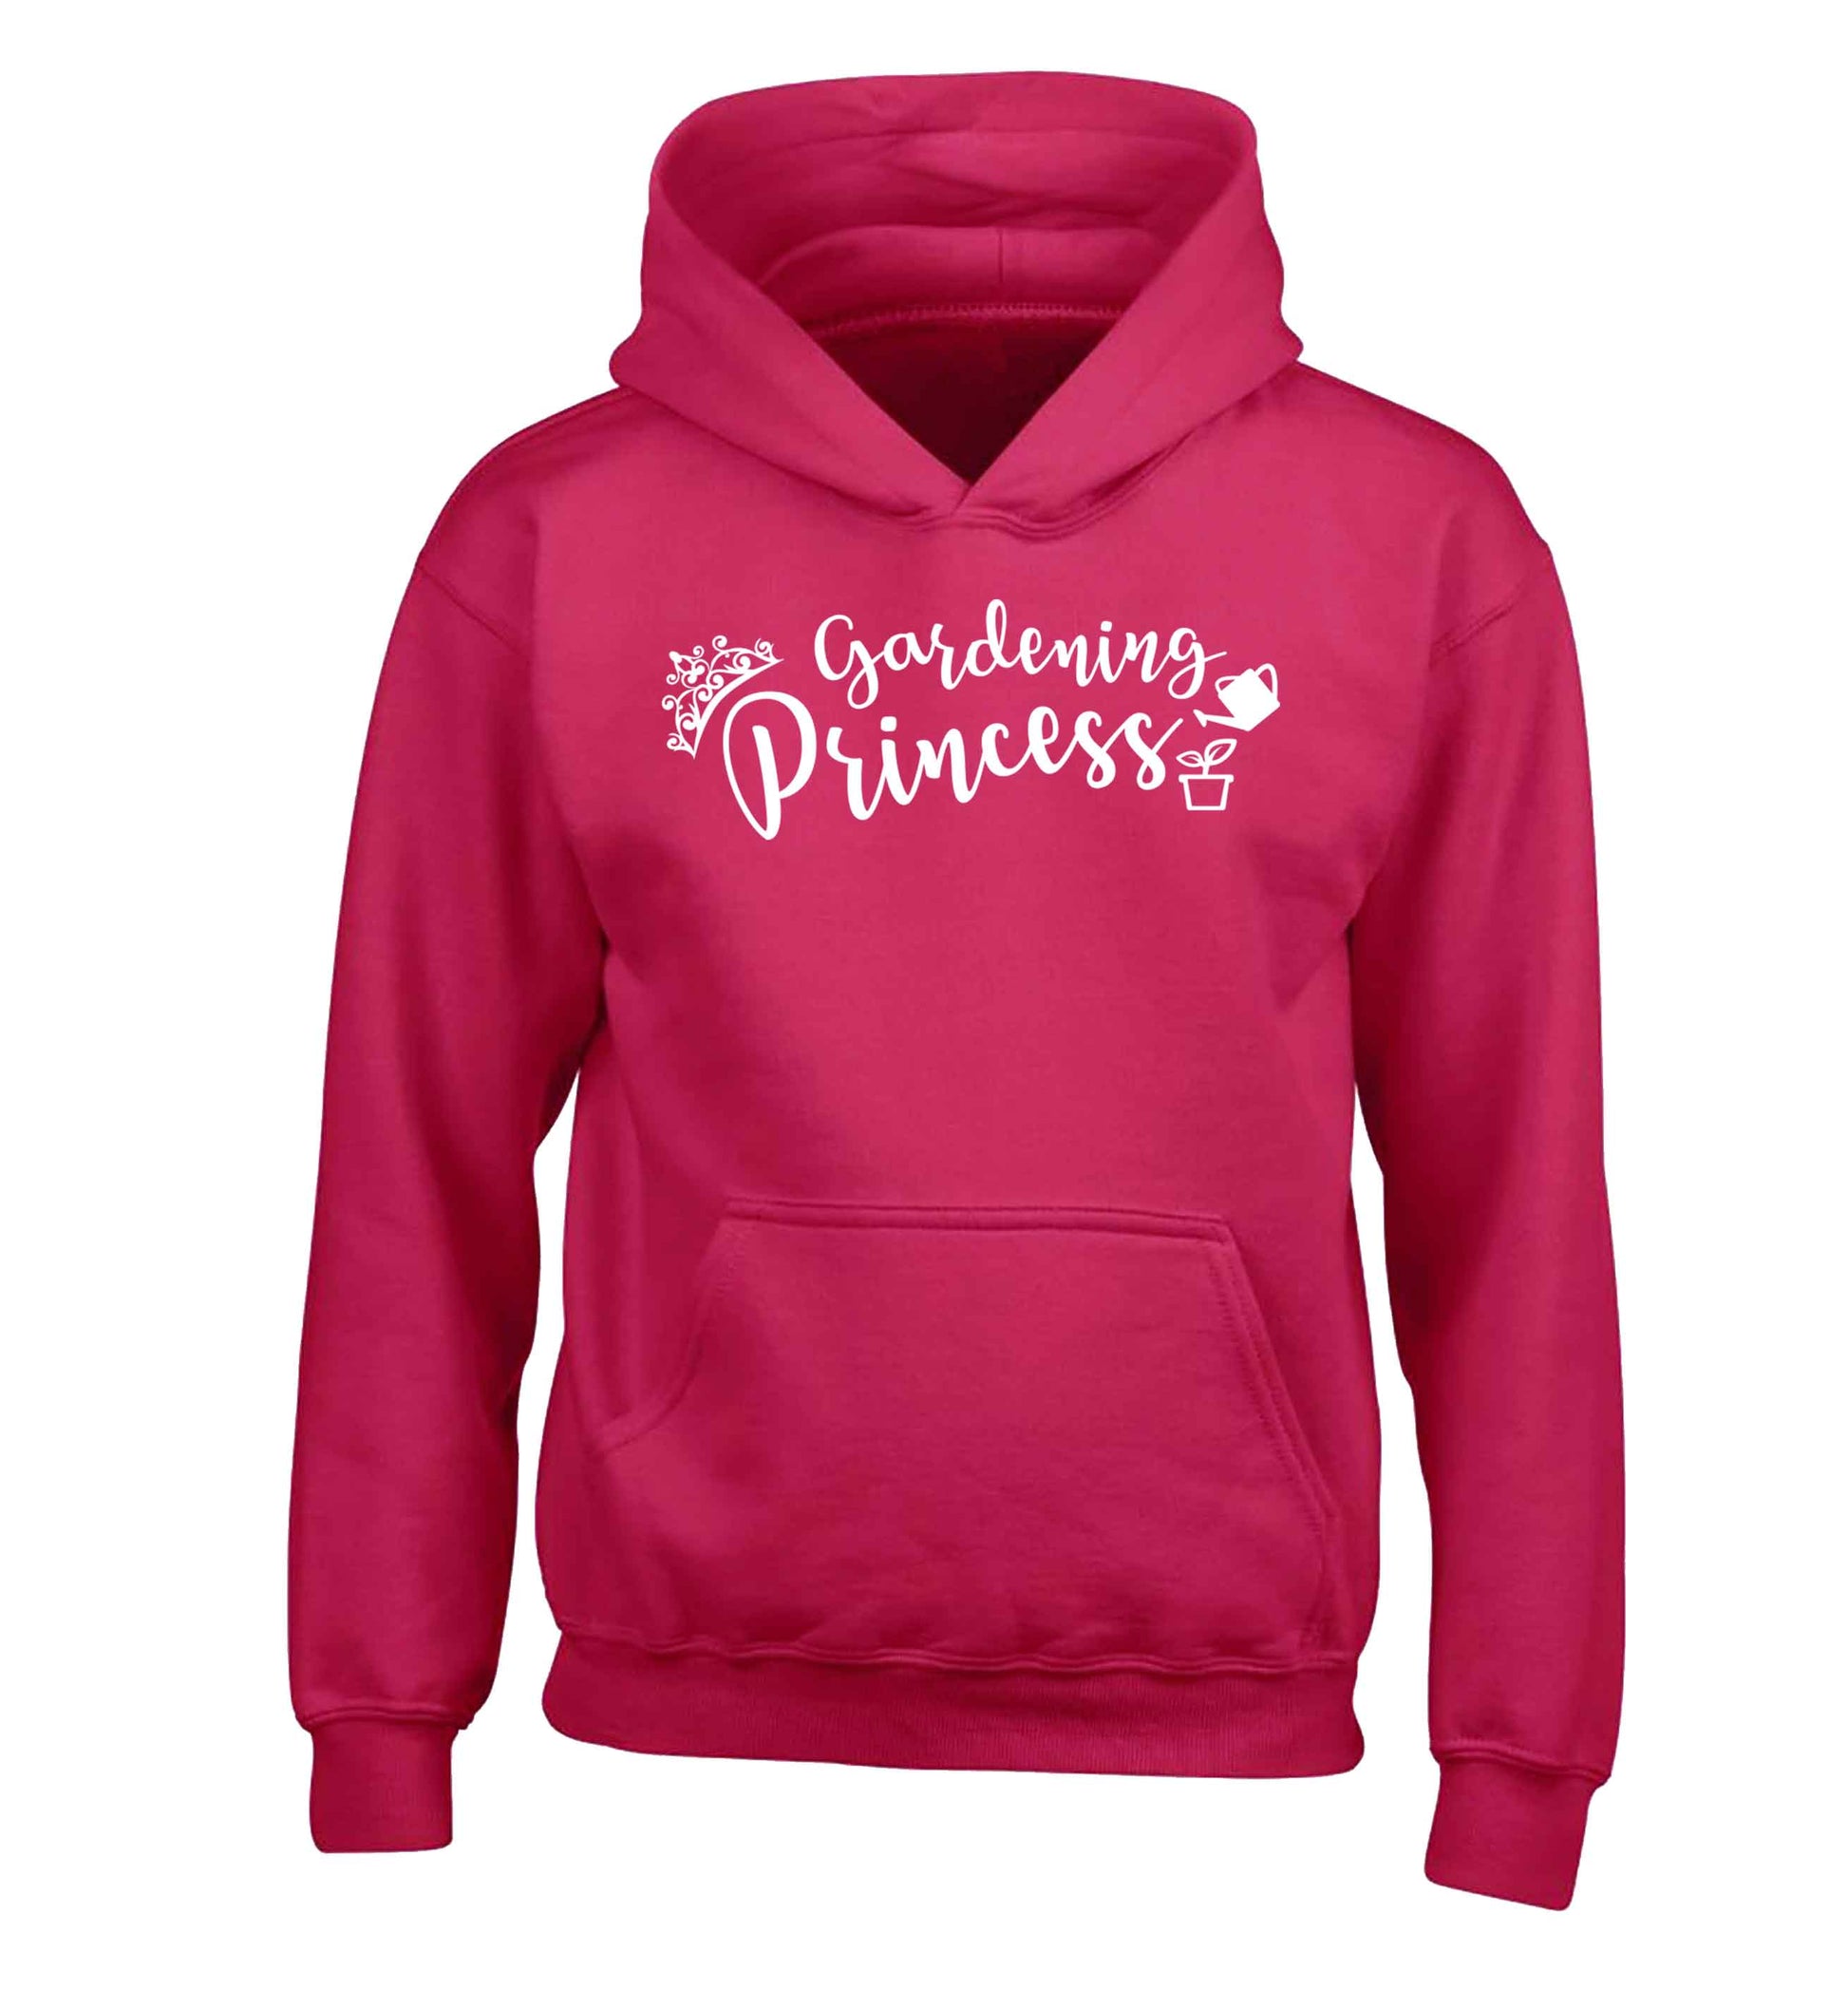 Gardening princess children's pink hoodie 12-13 Years